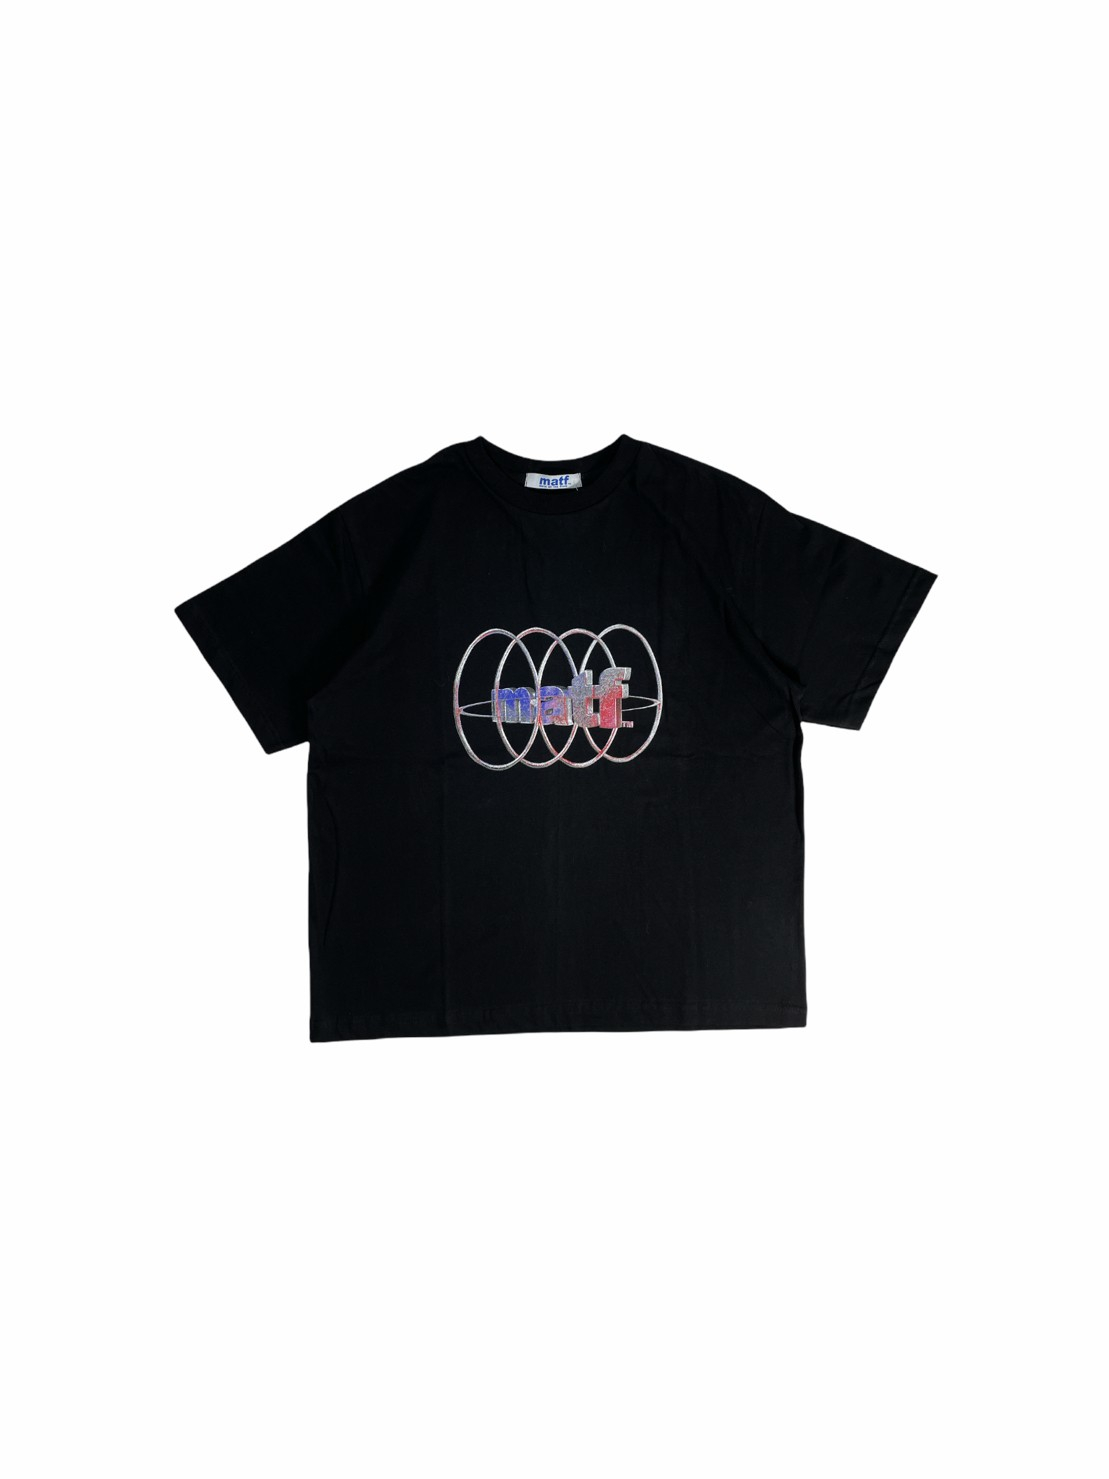 Matf trademark *spin dark* t-shirt